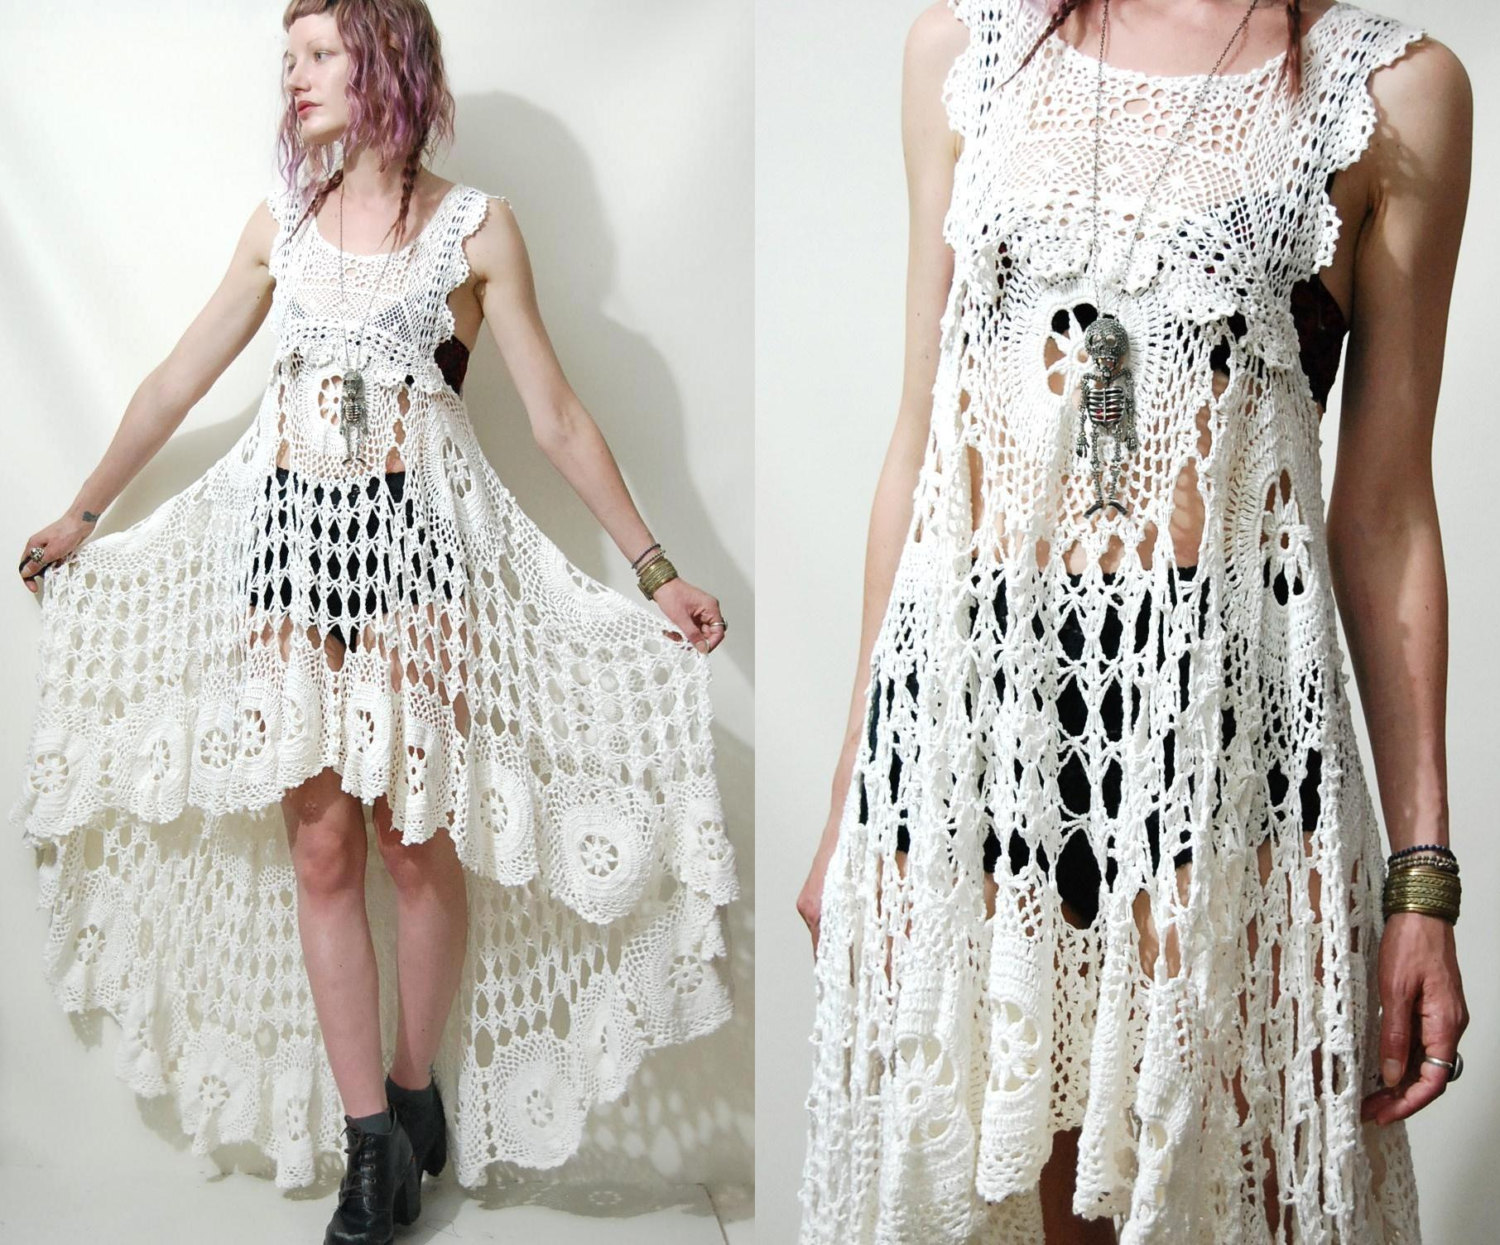 Crochet Wedding Dress on Pinterest | Crochet Wedding Dresses, Crochet ...